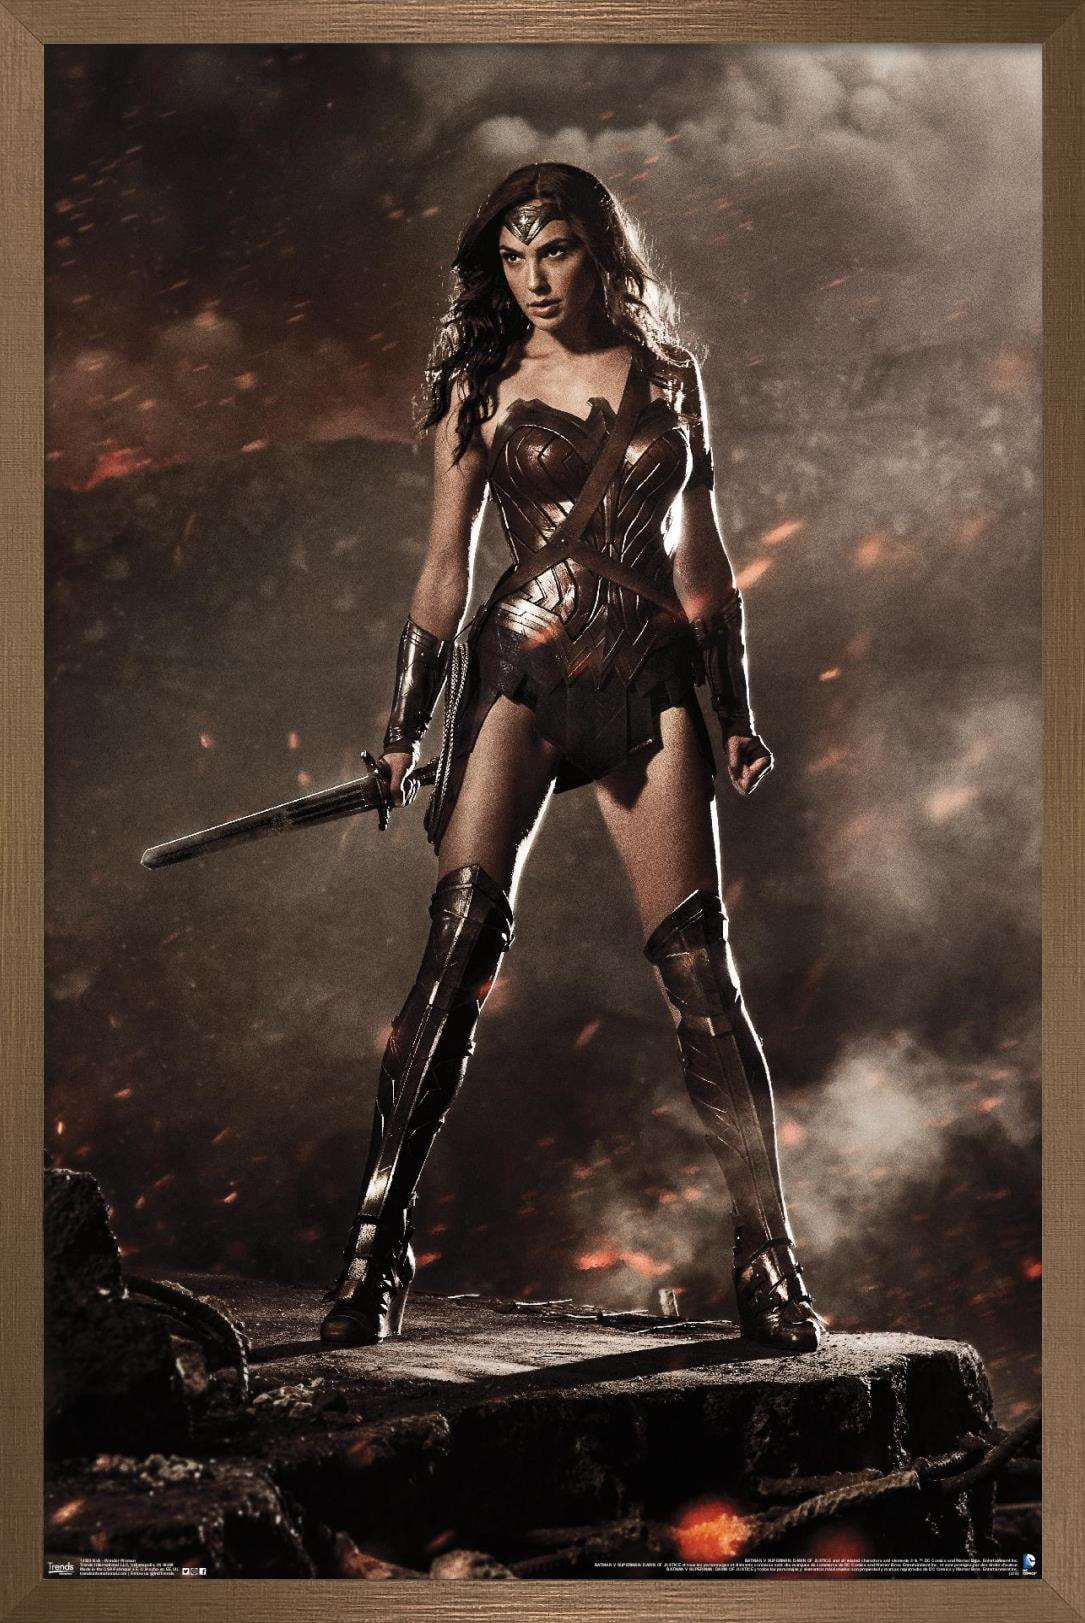 Arriba 41+ imagen batman v superman wonder woman poster